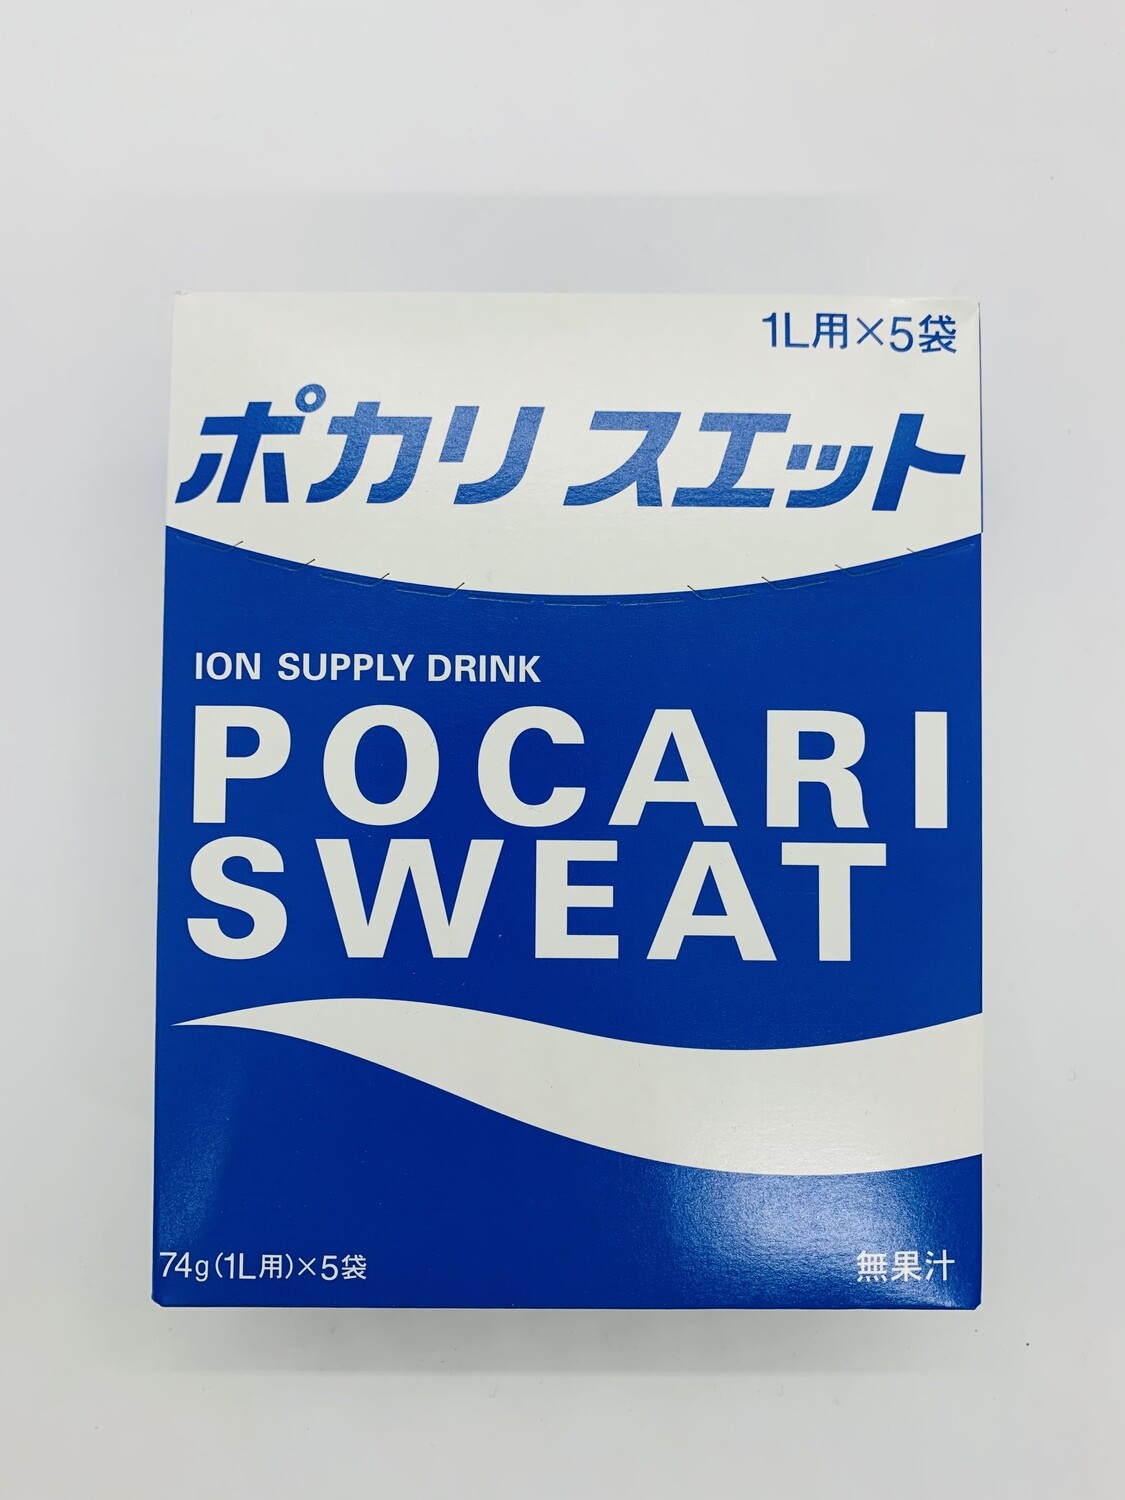 Pocari Sweat Powder box